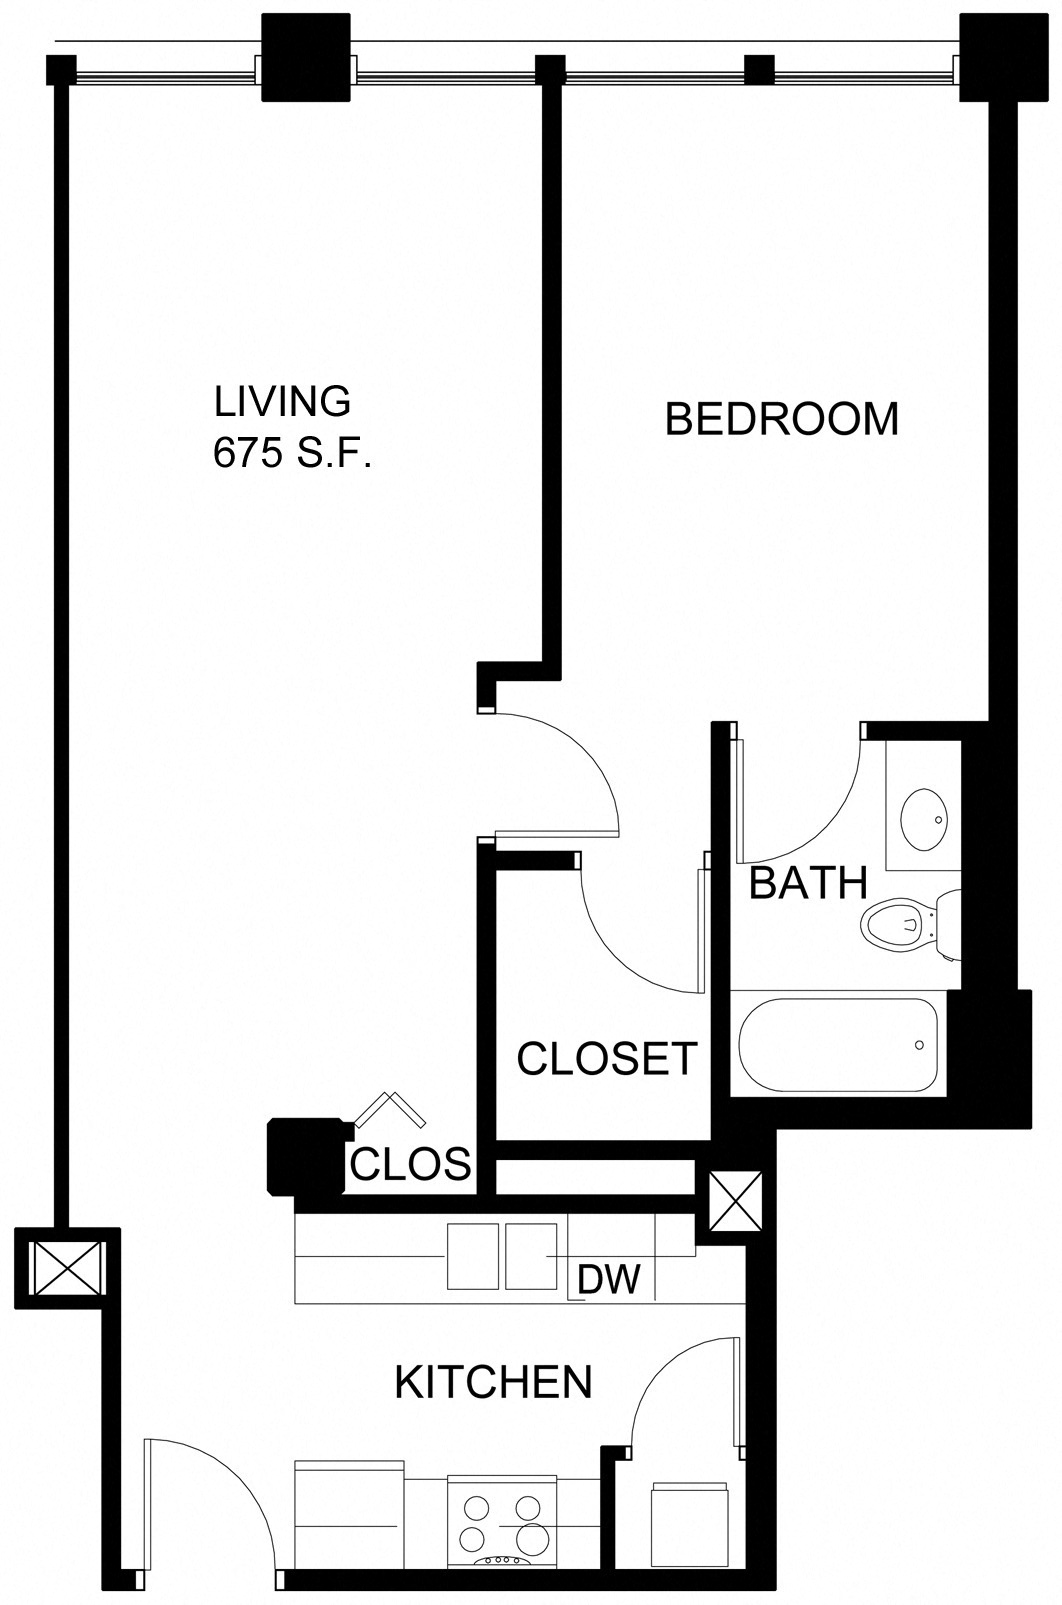 Floorplan for Apartment #P529B, 1 bedroom unit at Halstead Providence